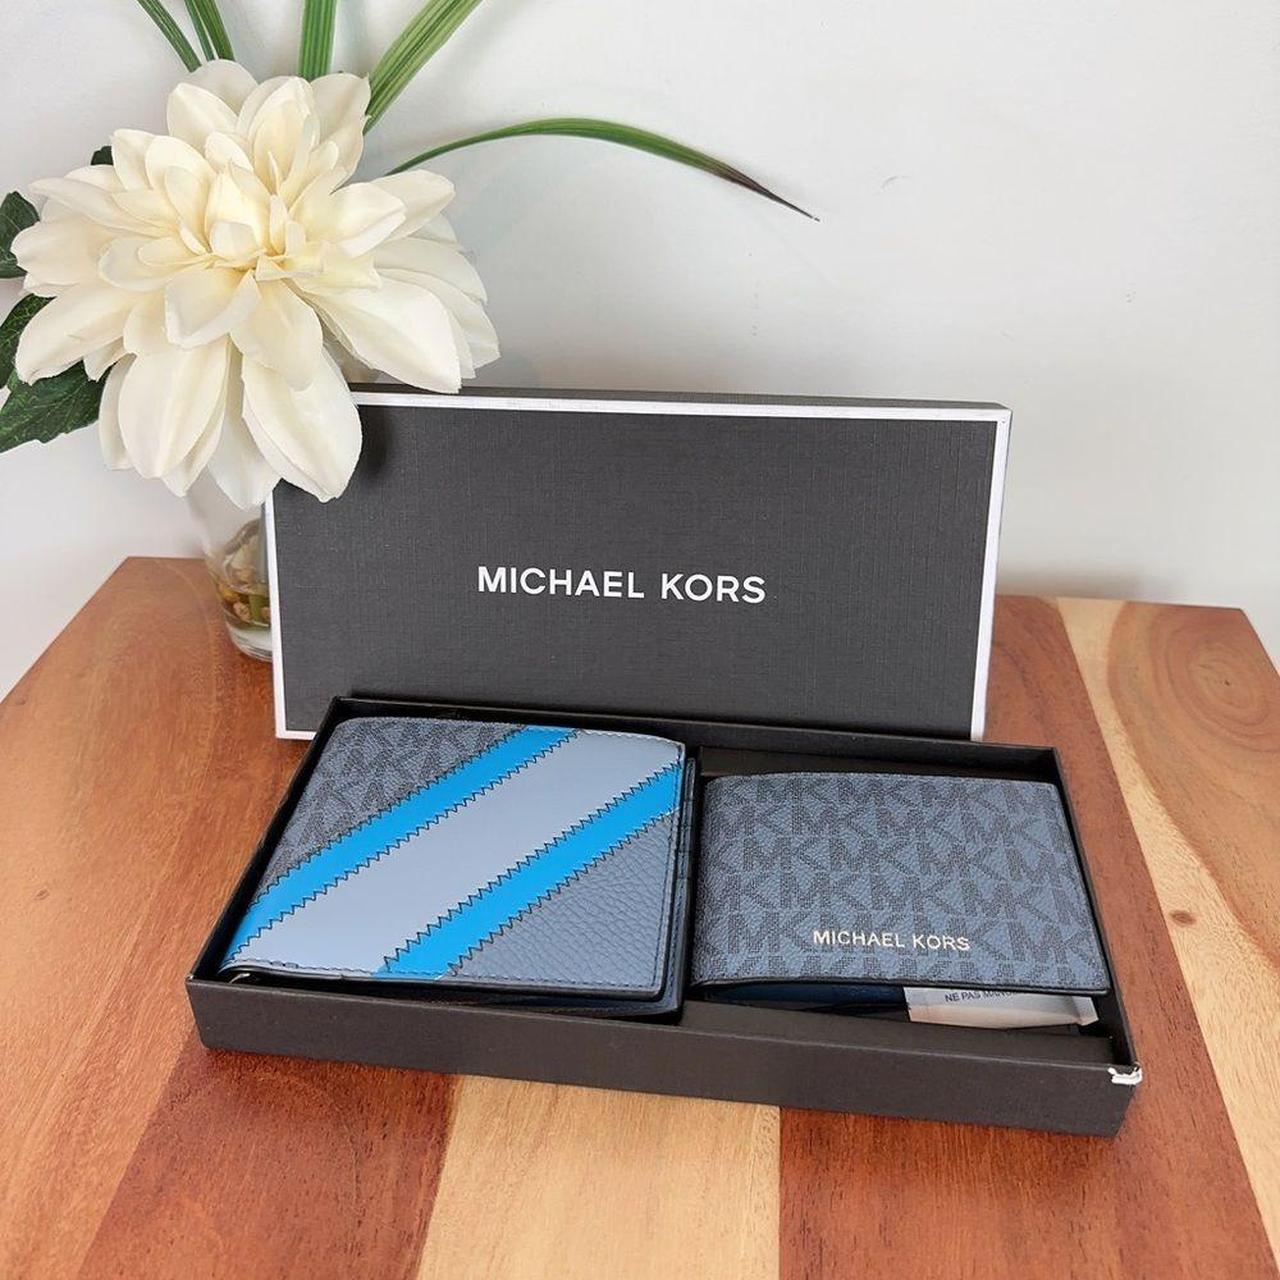 Red, 8” Michael Kors wallet with gold hardware. - Depop